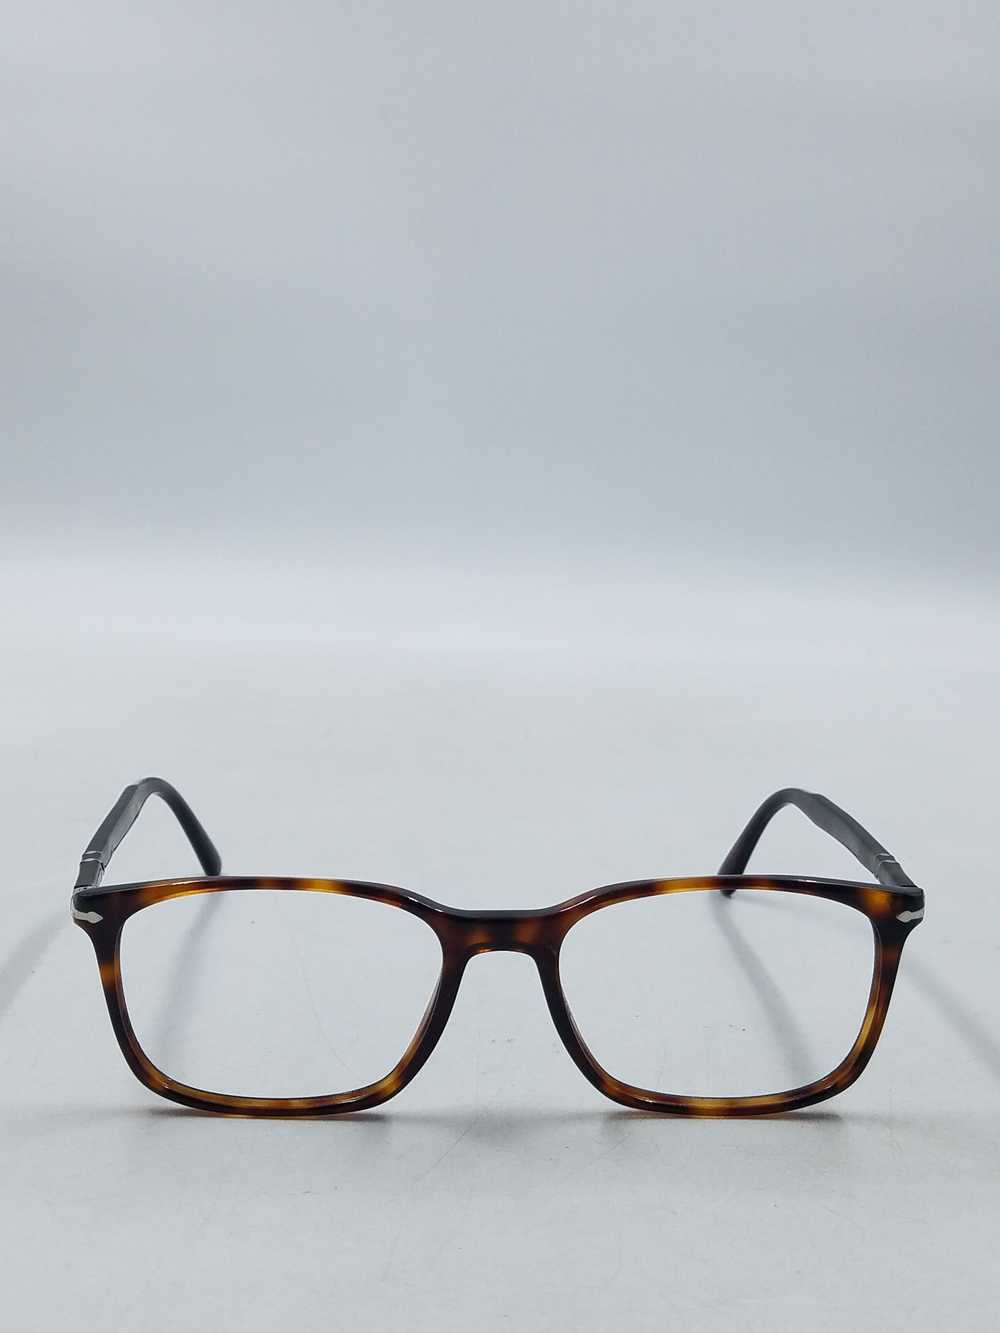 Persol Tortoise Browline Eyeglasses - image 2